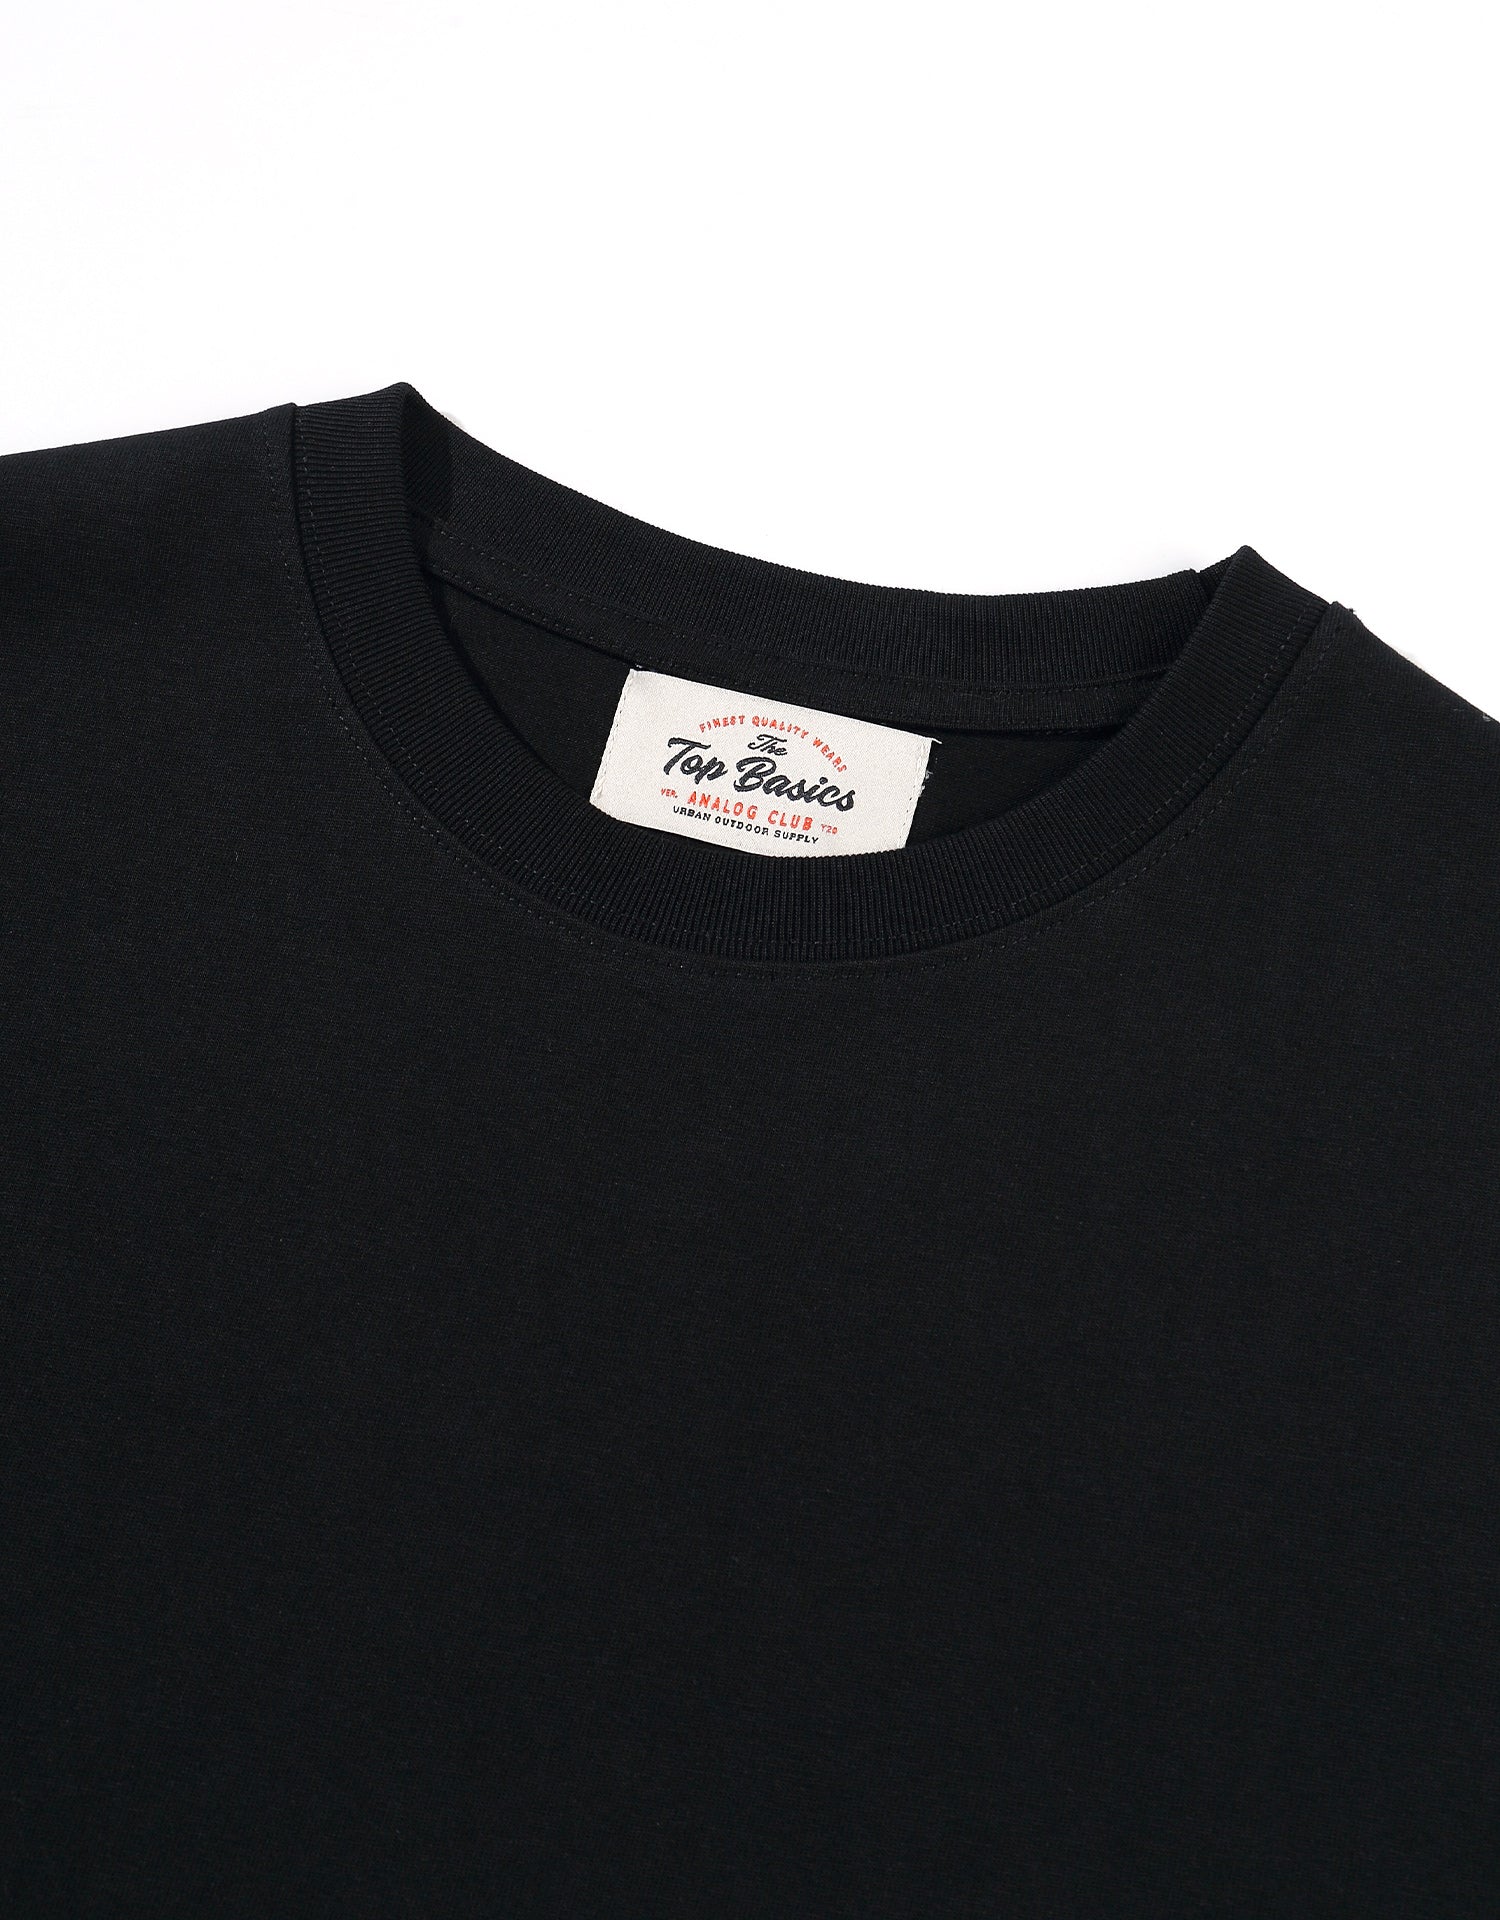 TopBasics Arm Badge Cotton T-Shirt